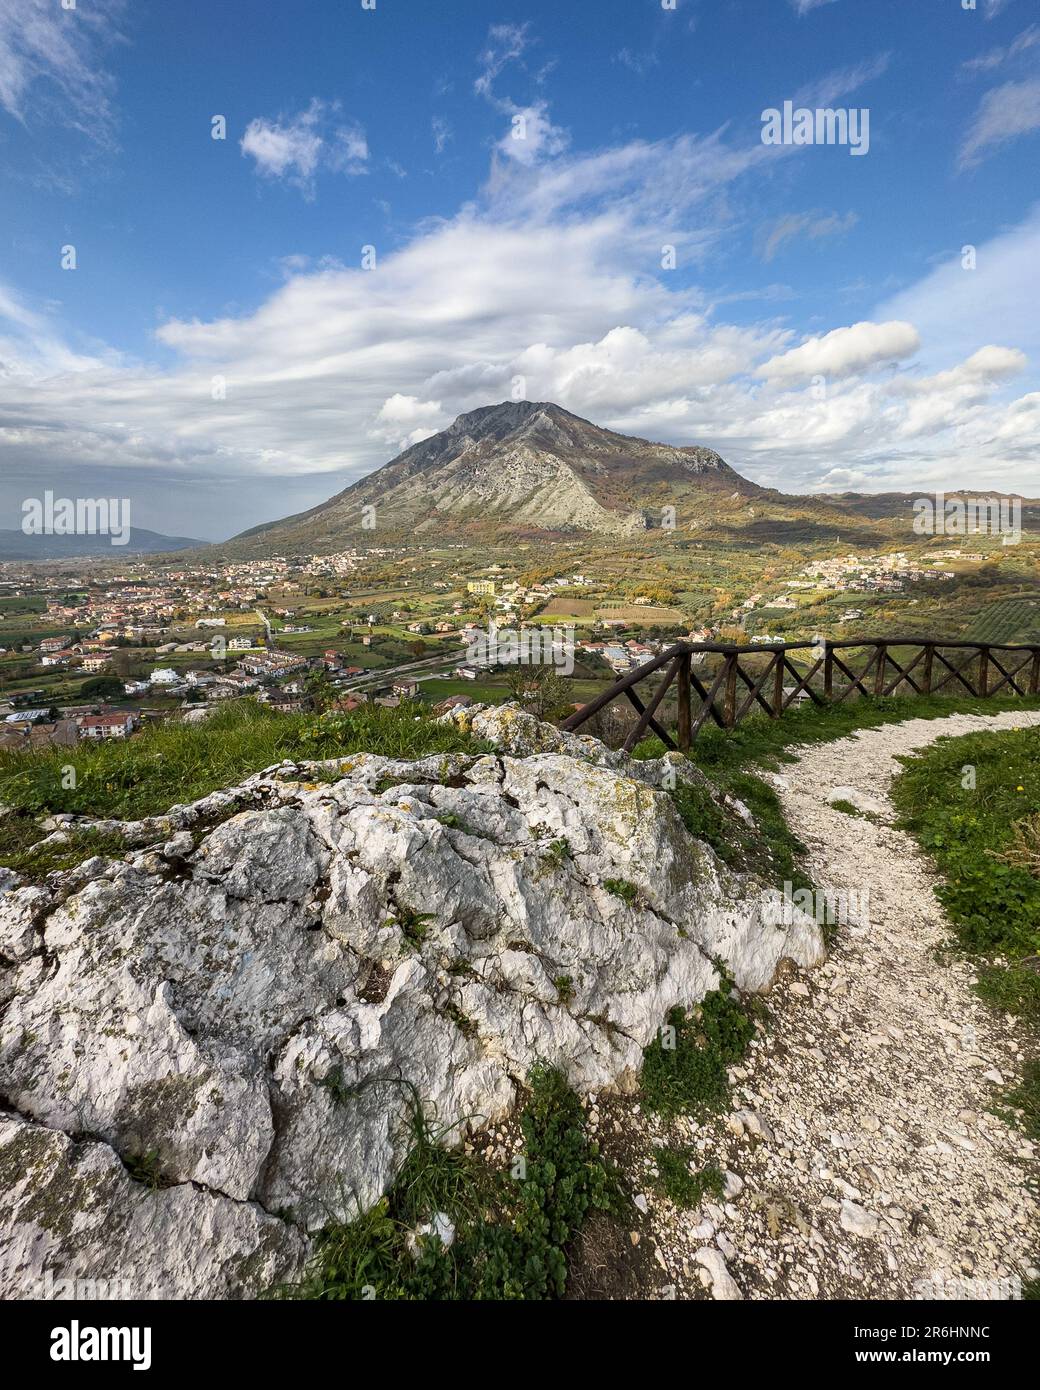 A Scenic landscape with Mount Taburno seen from Montesarchio, Campania, Italy Stock Photo